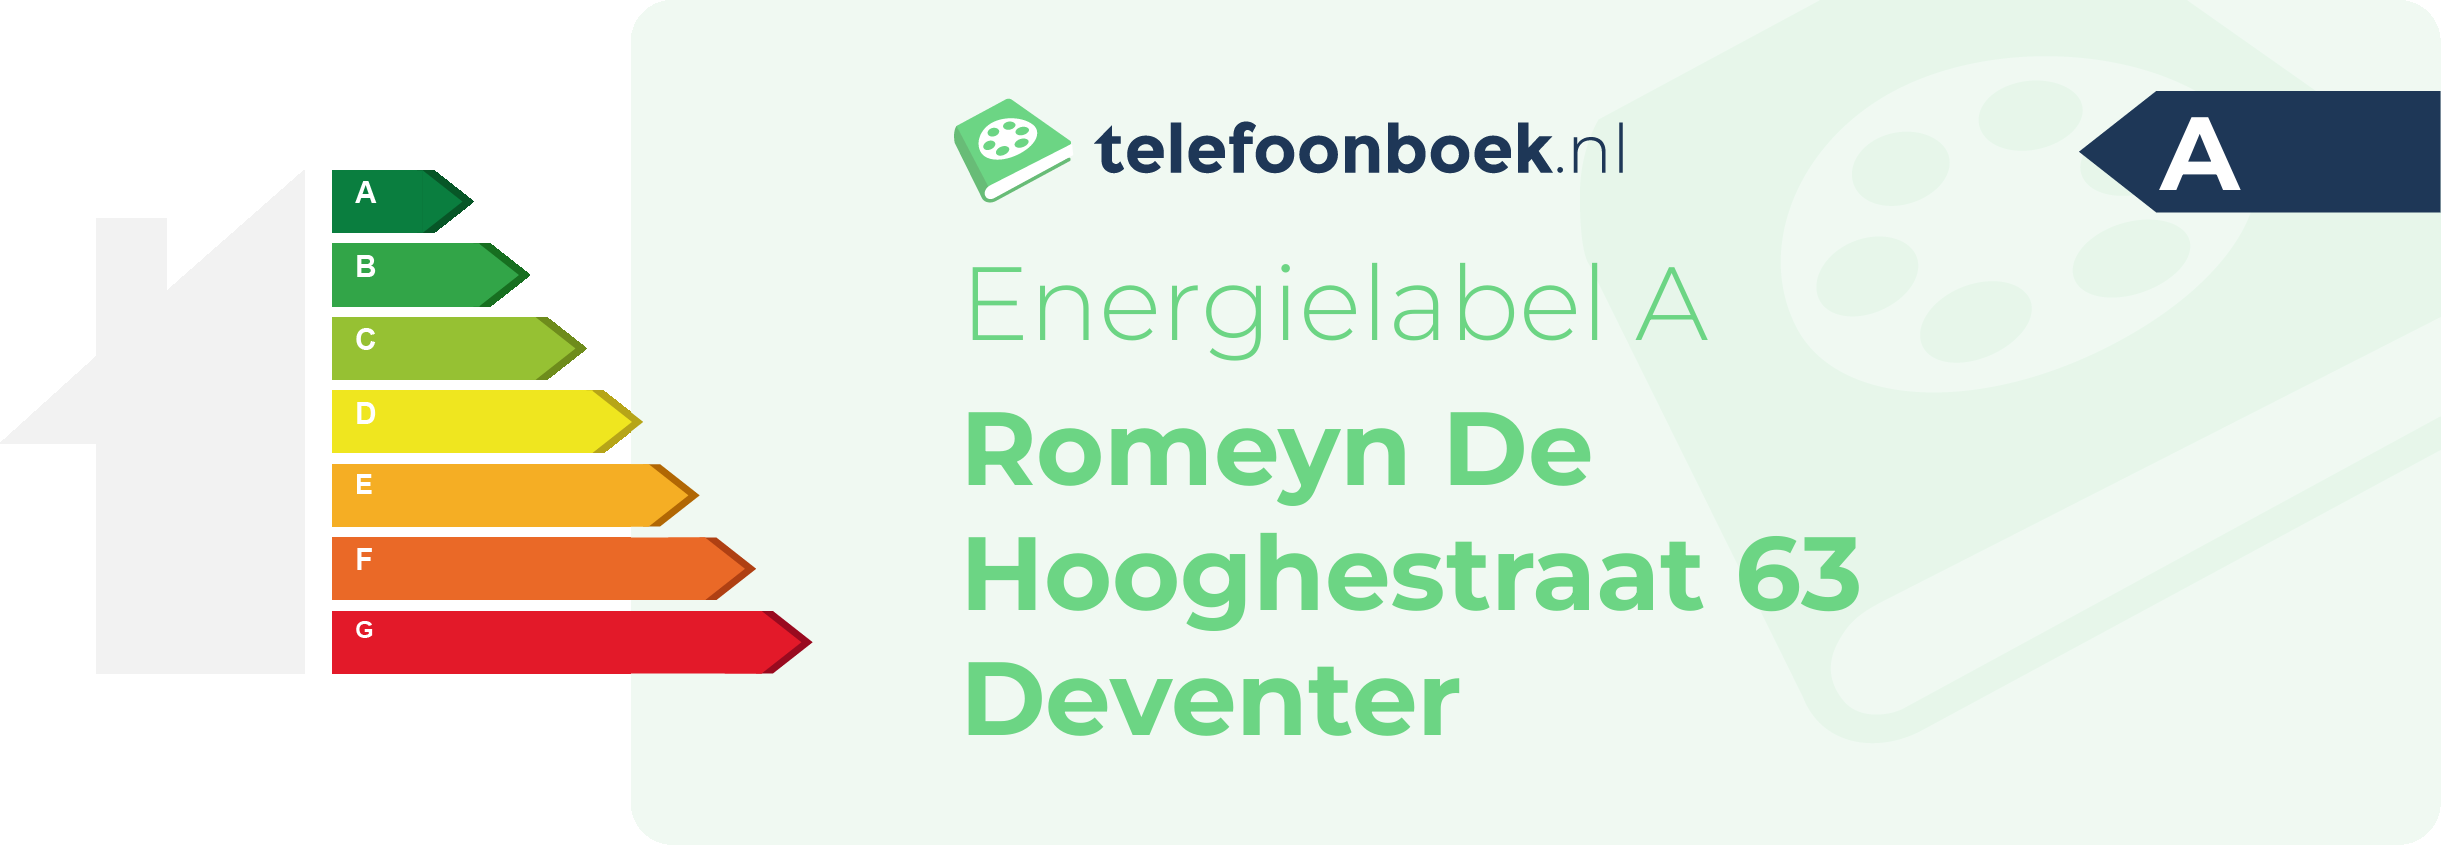 Energielabel Romeyn De Hooghestraat 63 Deventer